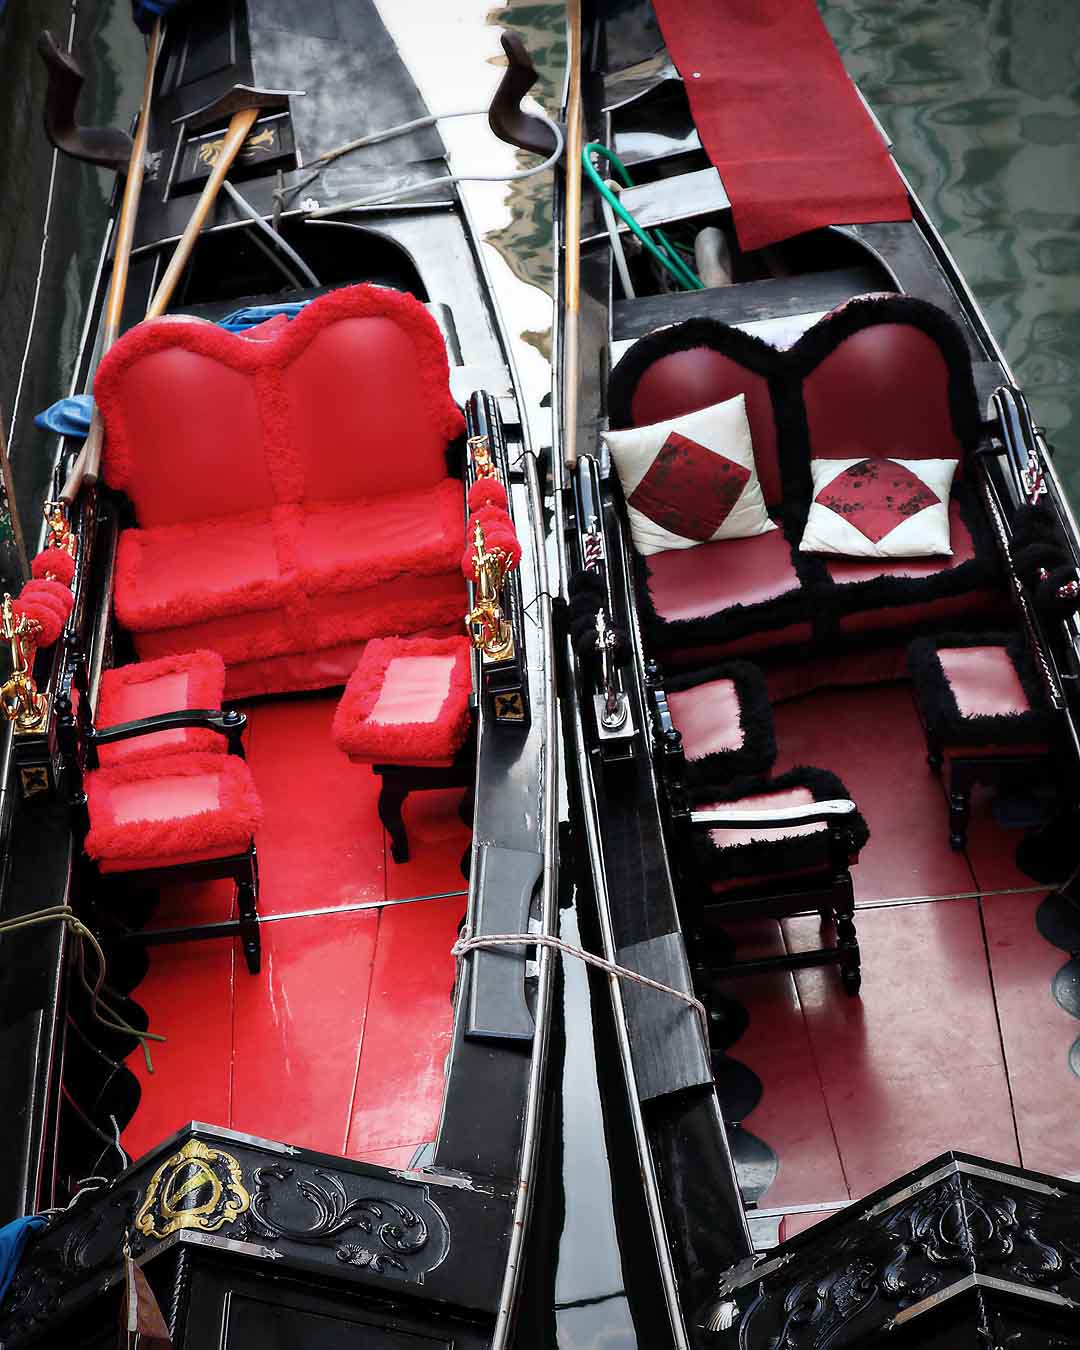 Gondolas di San Marco #1, Venice, Italy, 2008